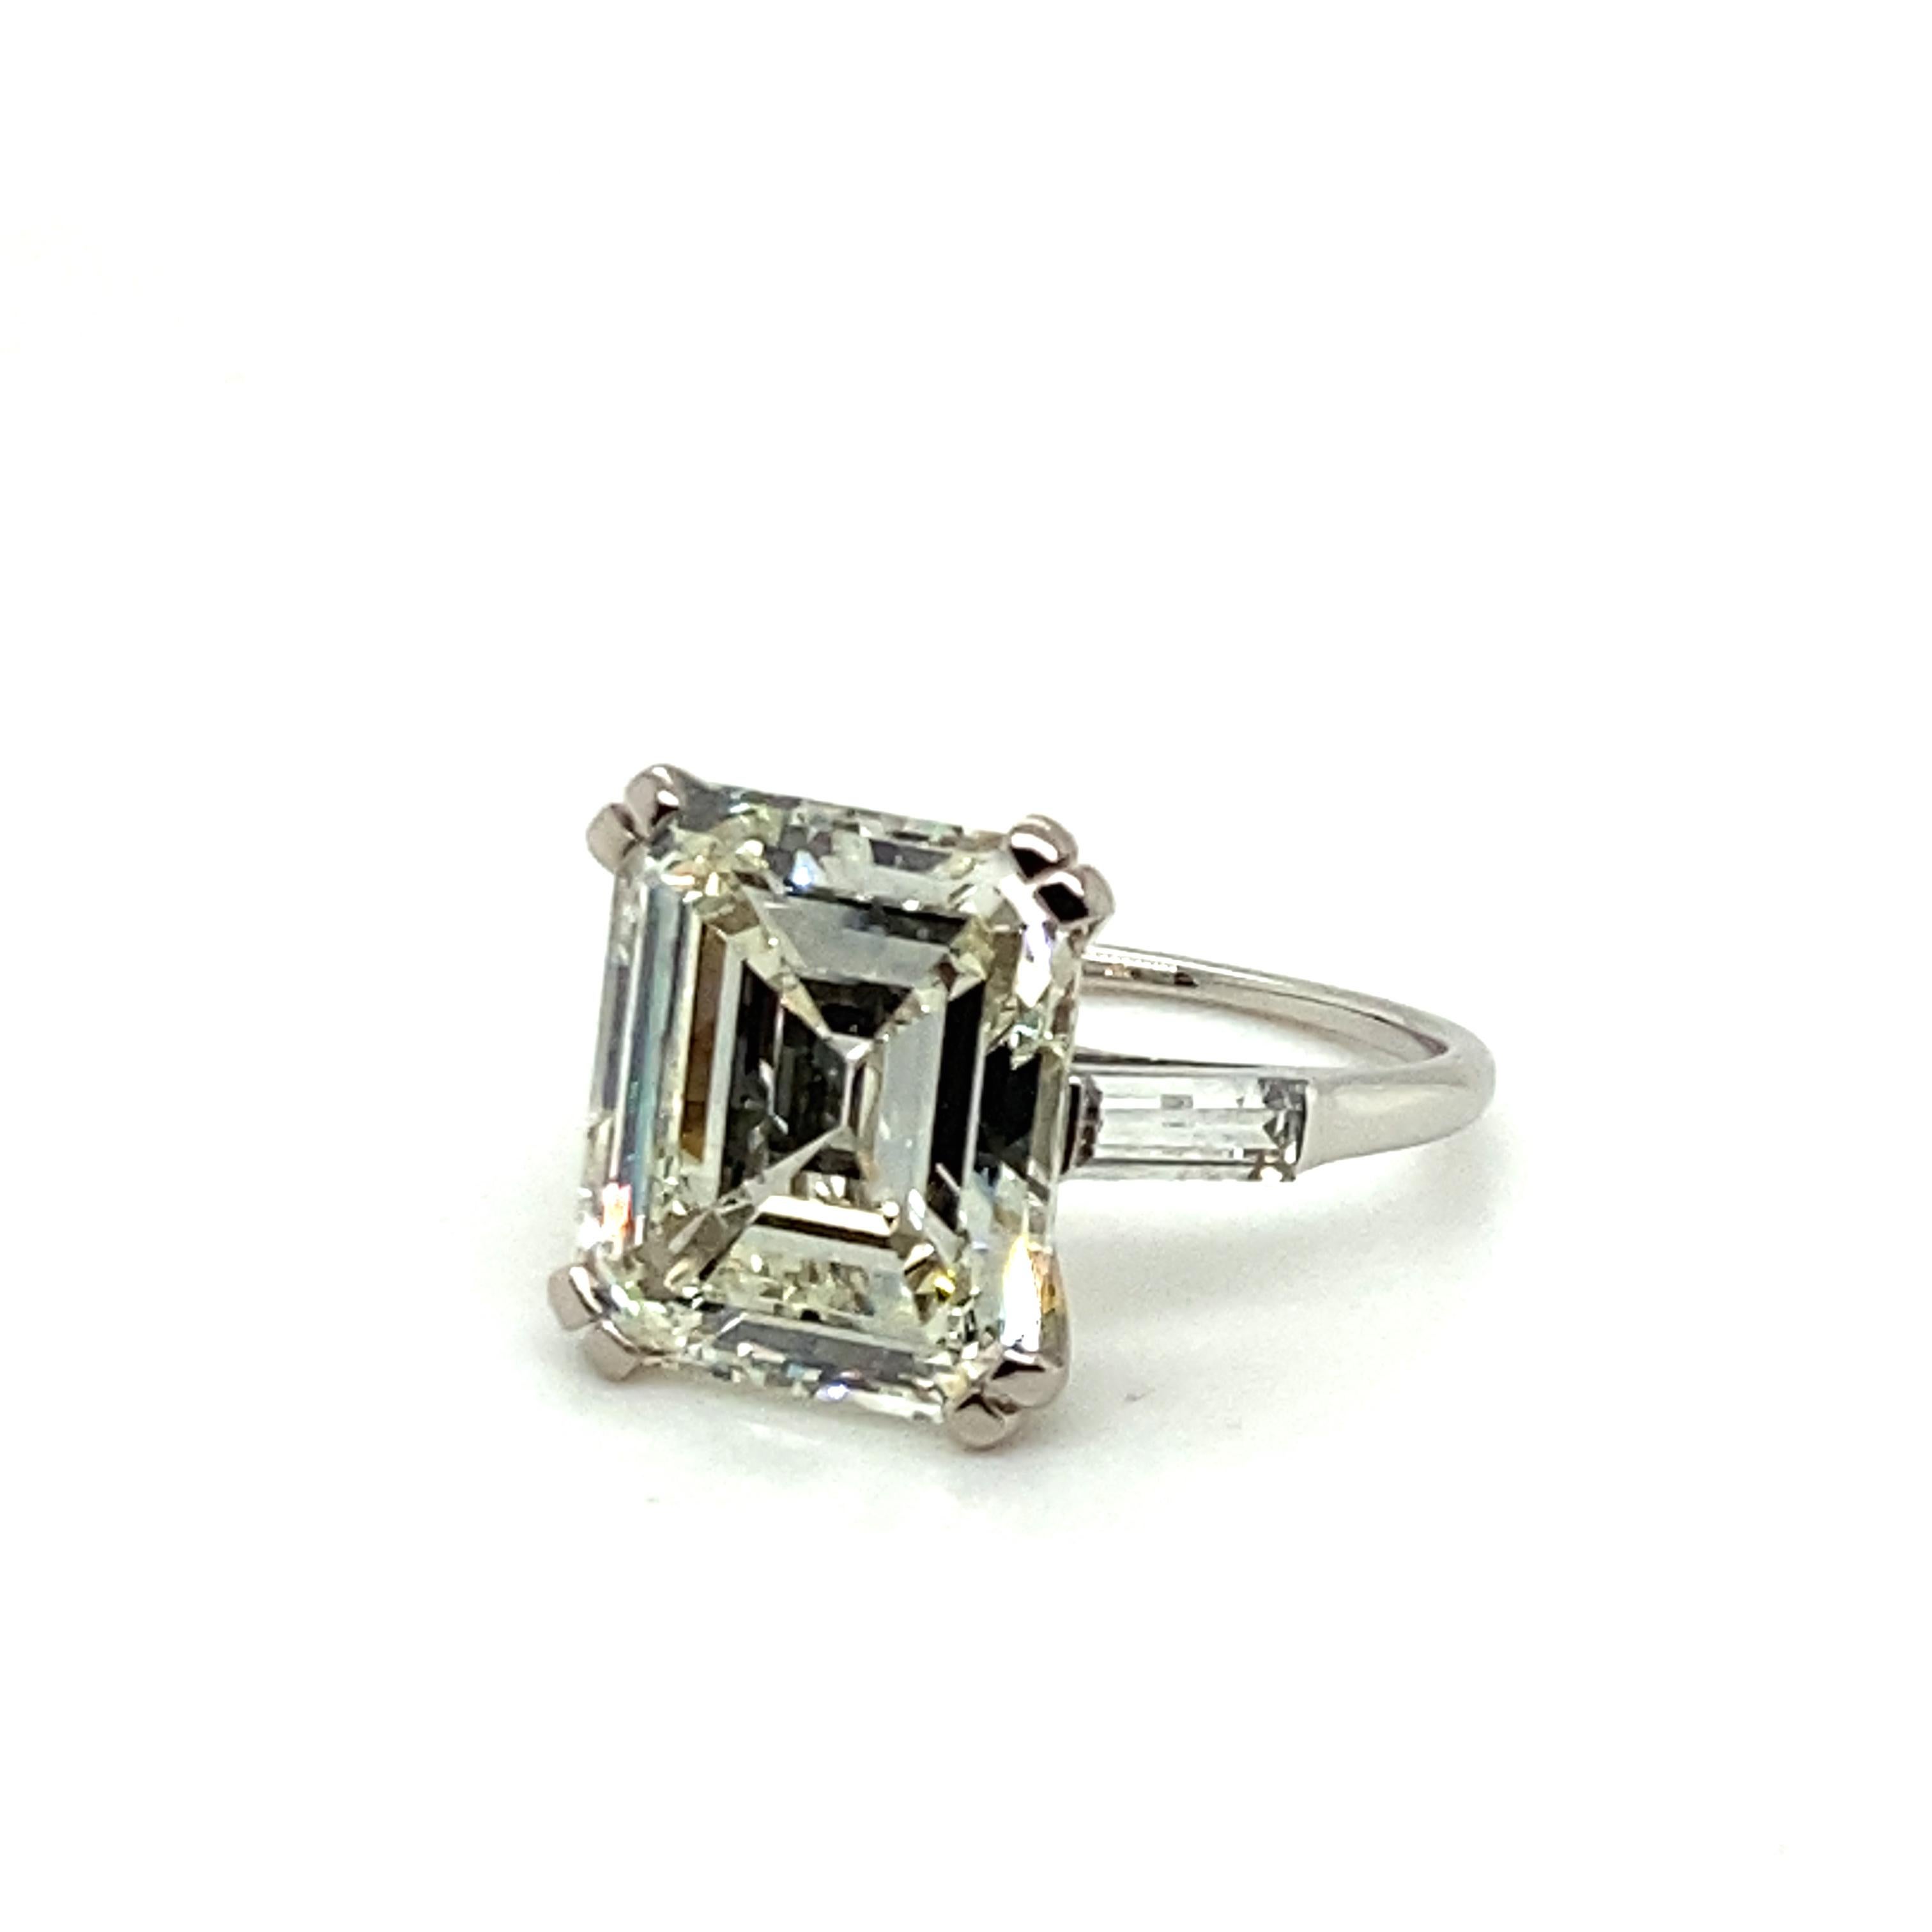 Emerald Cut Stunning 7.34 Ct GIA Certified Emerald-Cut Diamond Ring in Platinum 950